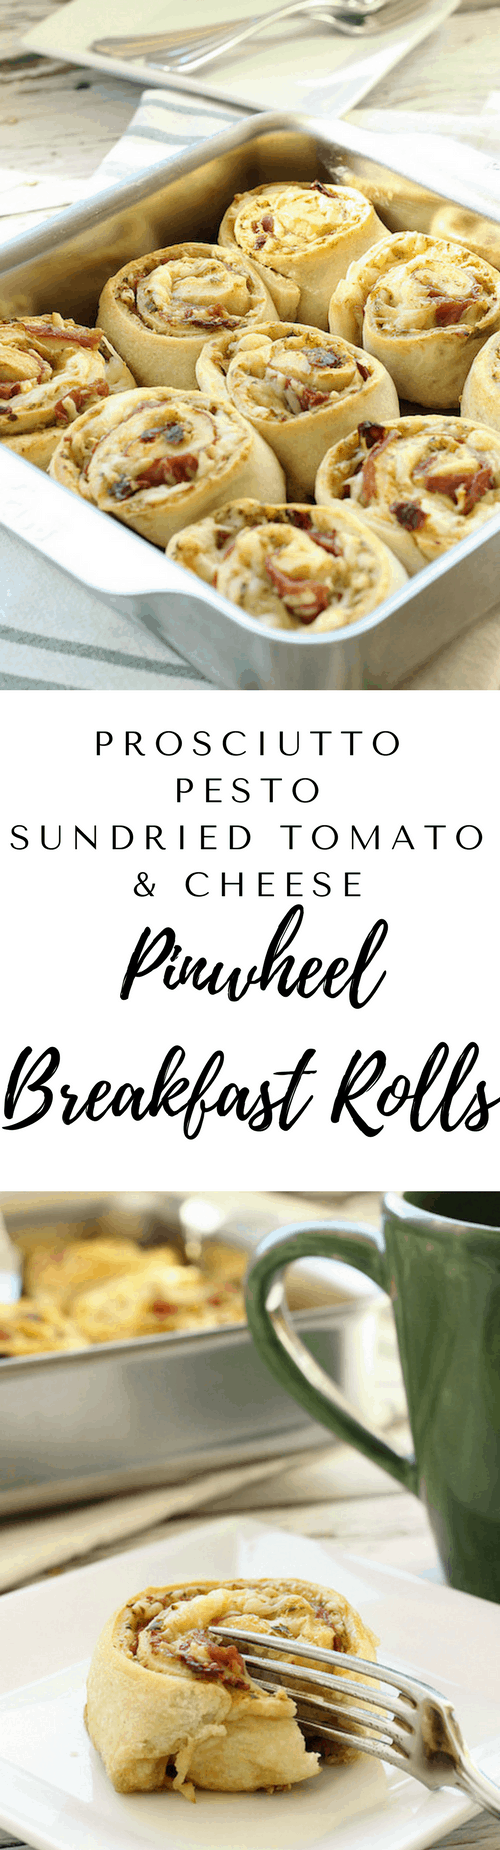 Prosciutto & Cheese Pinwheel Breakfast Rolls|Craving Something Healthy